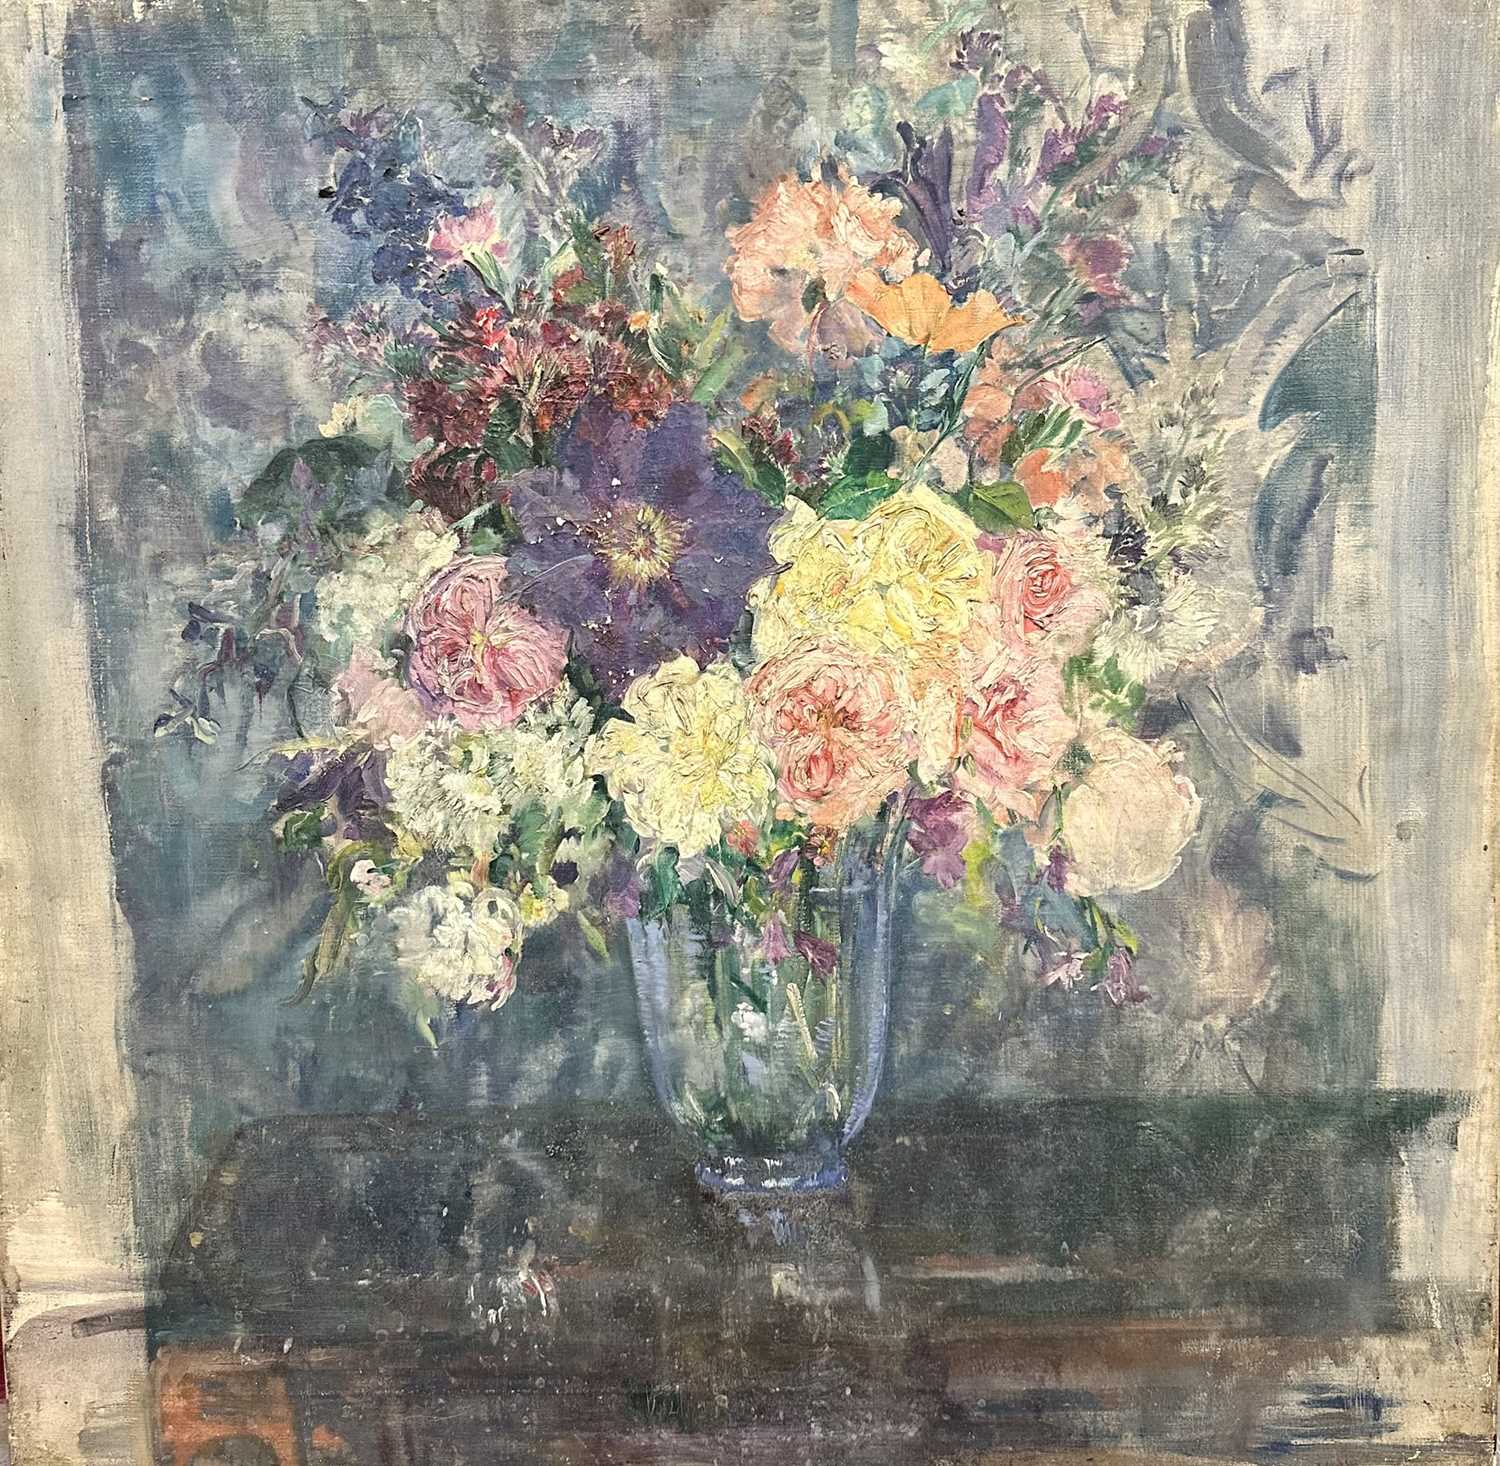 Amy Watt (1900-1956) oil on canvas, still life of flowers in a glass vase, 60 x 60cm